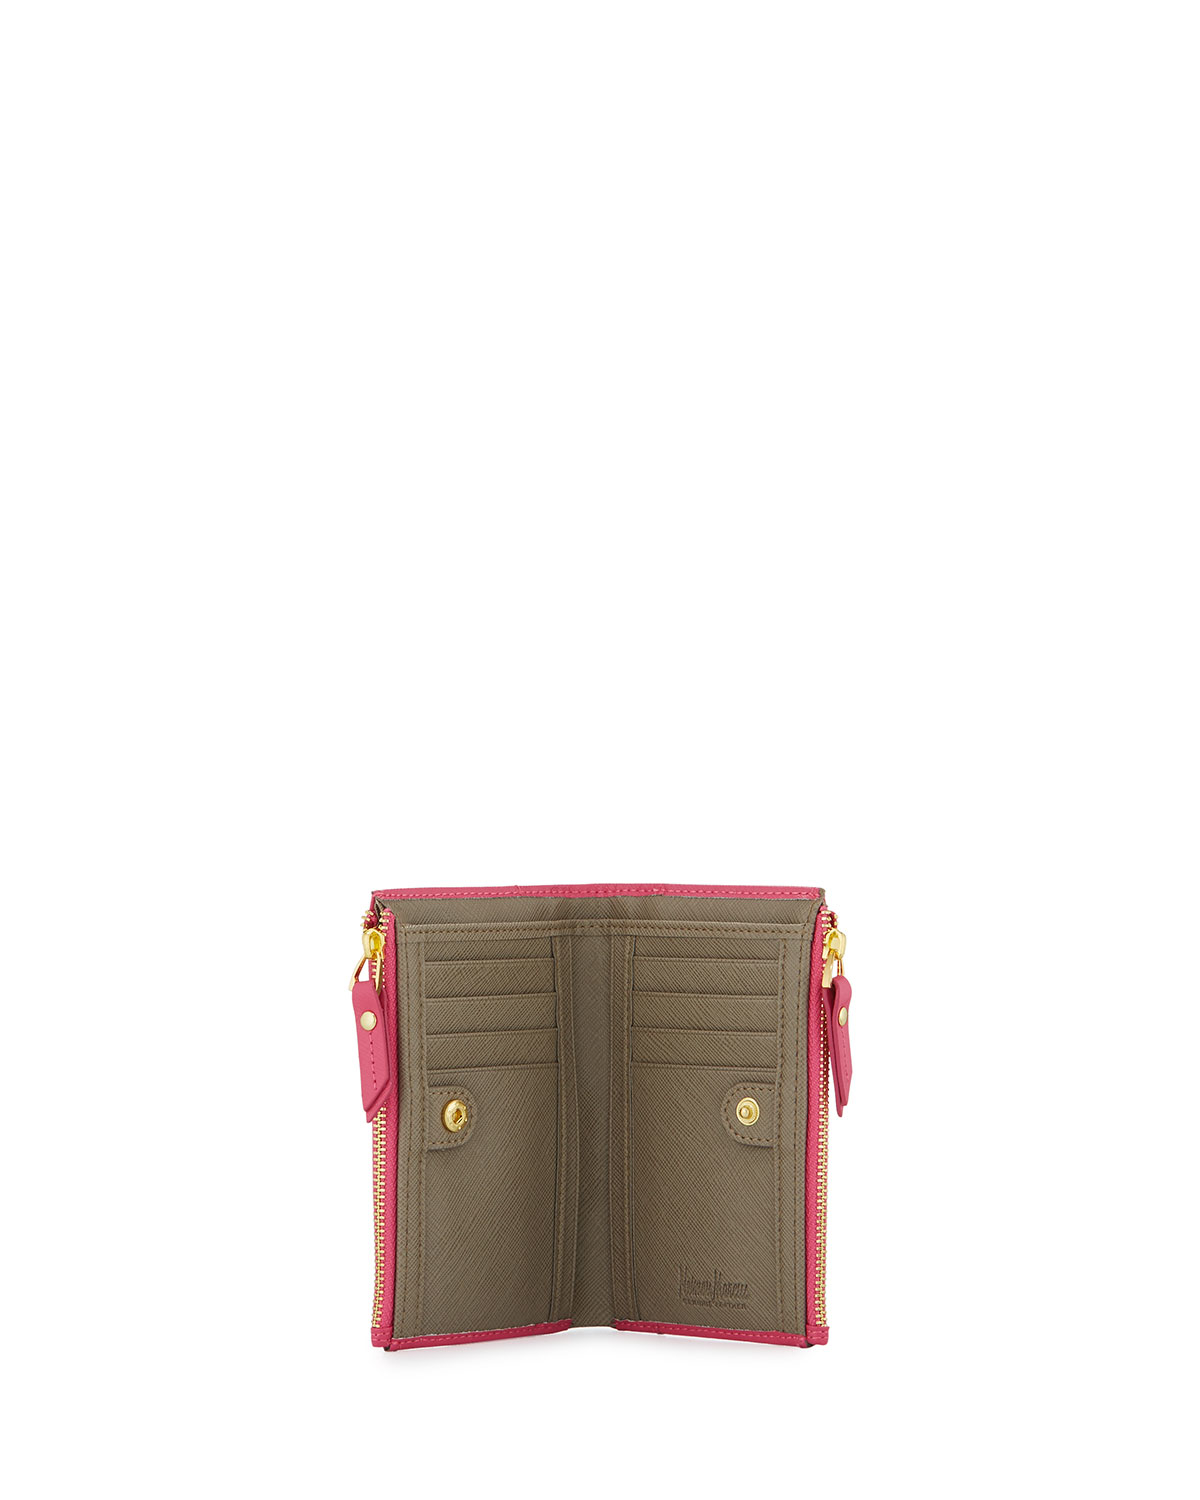 Lyst - Neiman Marcus Saffiano Leather Double-zip Wallet in Pink